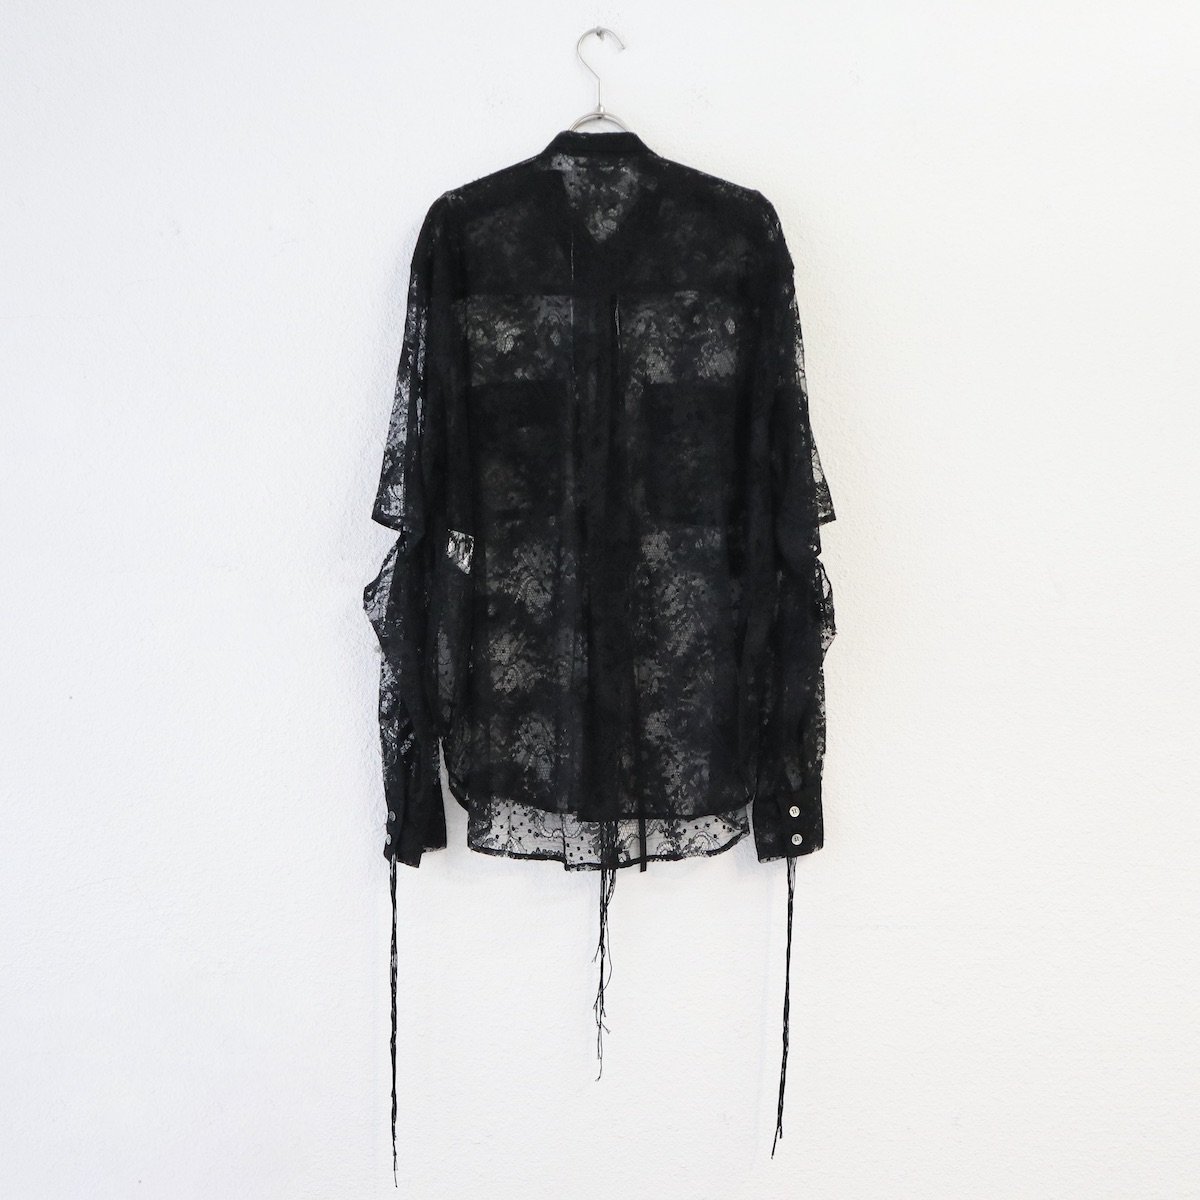 Midorikawa / Lace shirt-Midorikawaの通販EQUAL